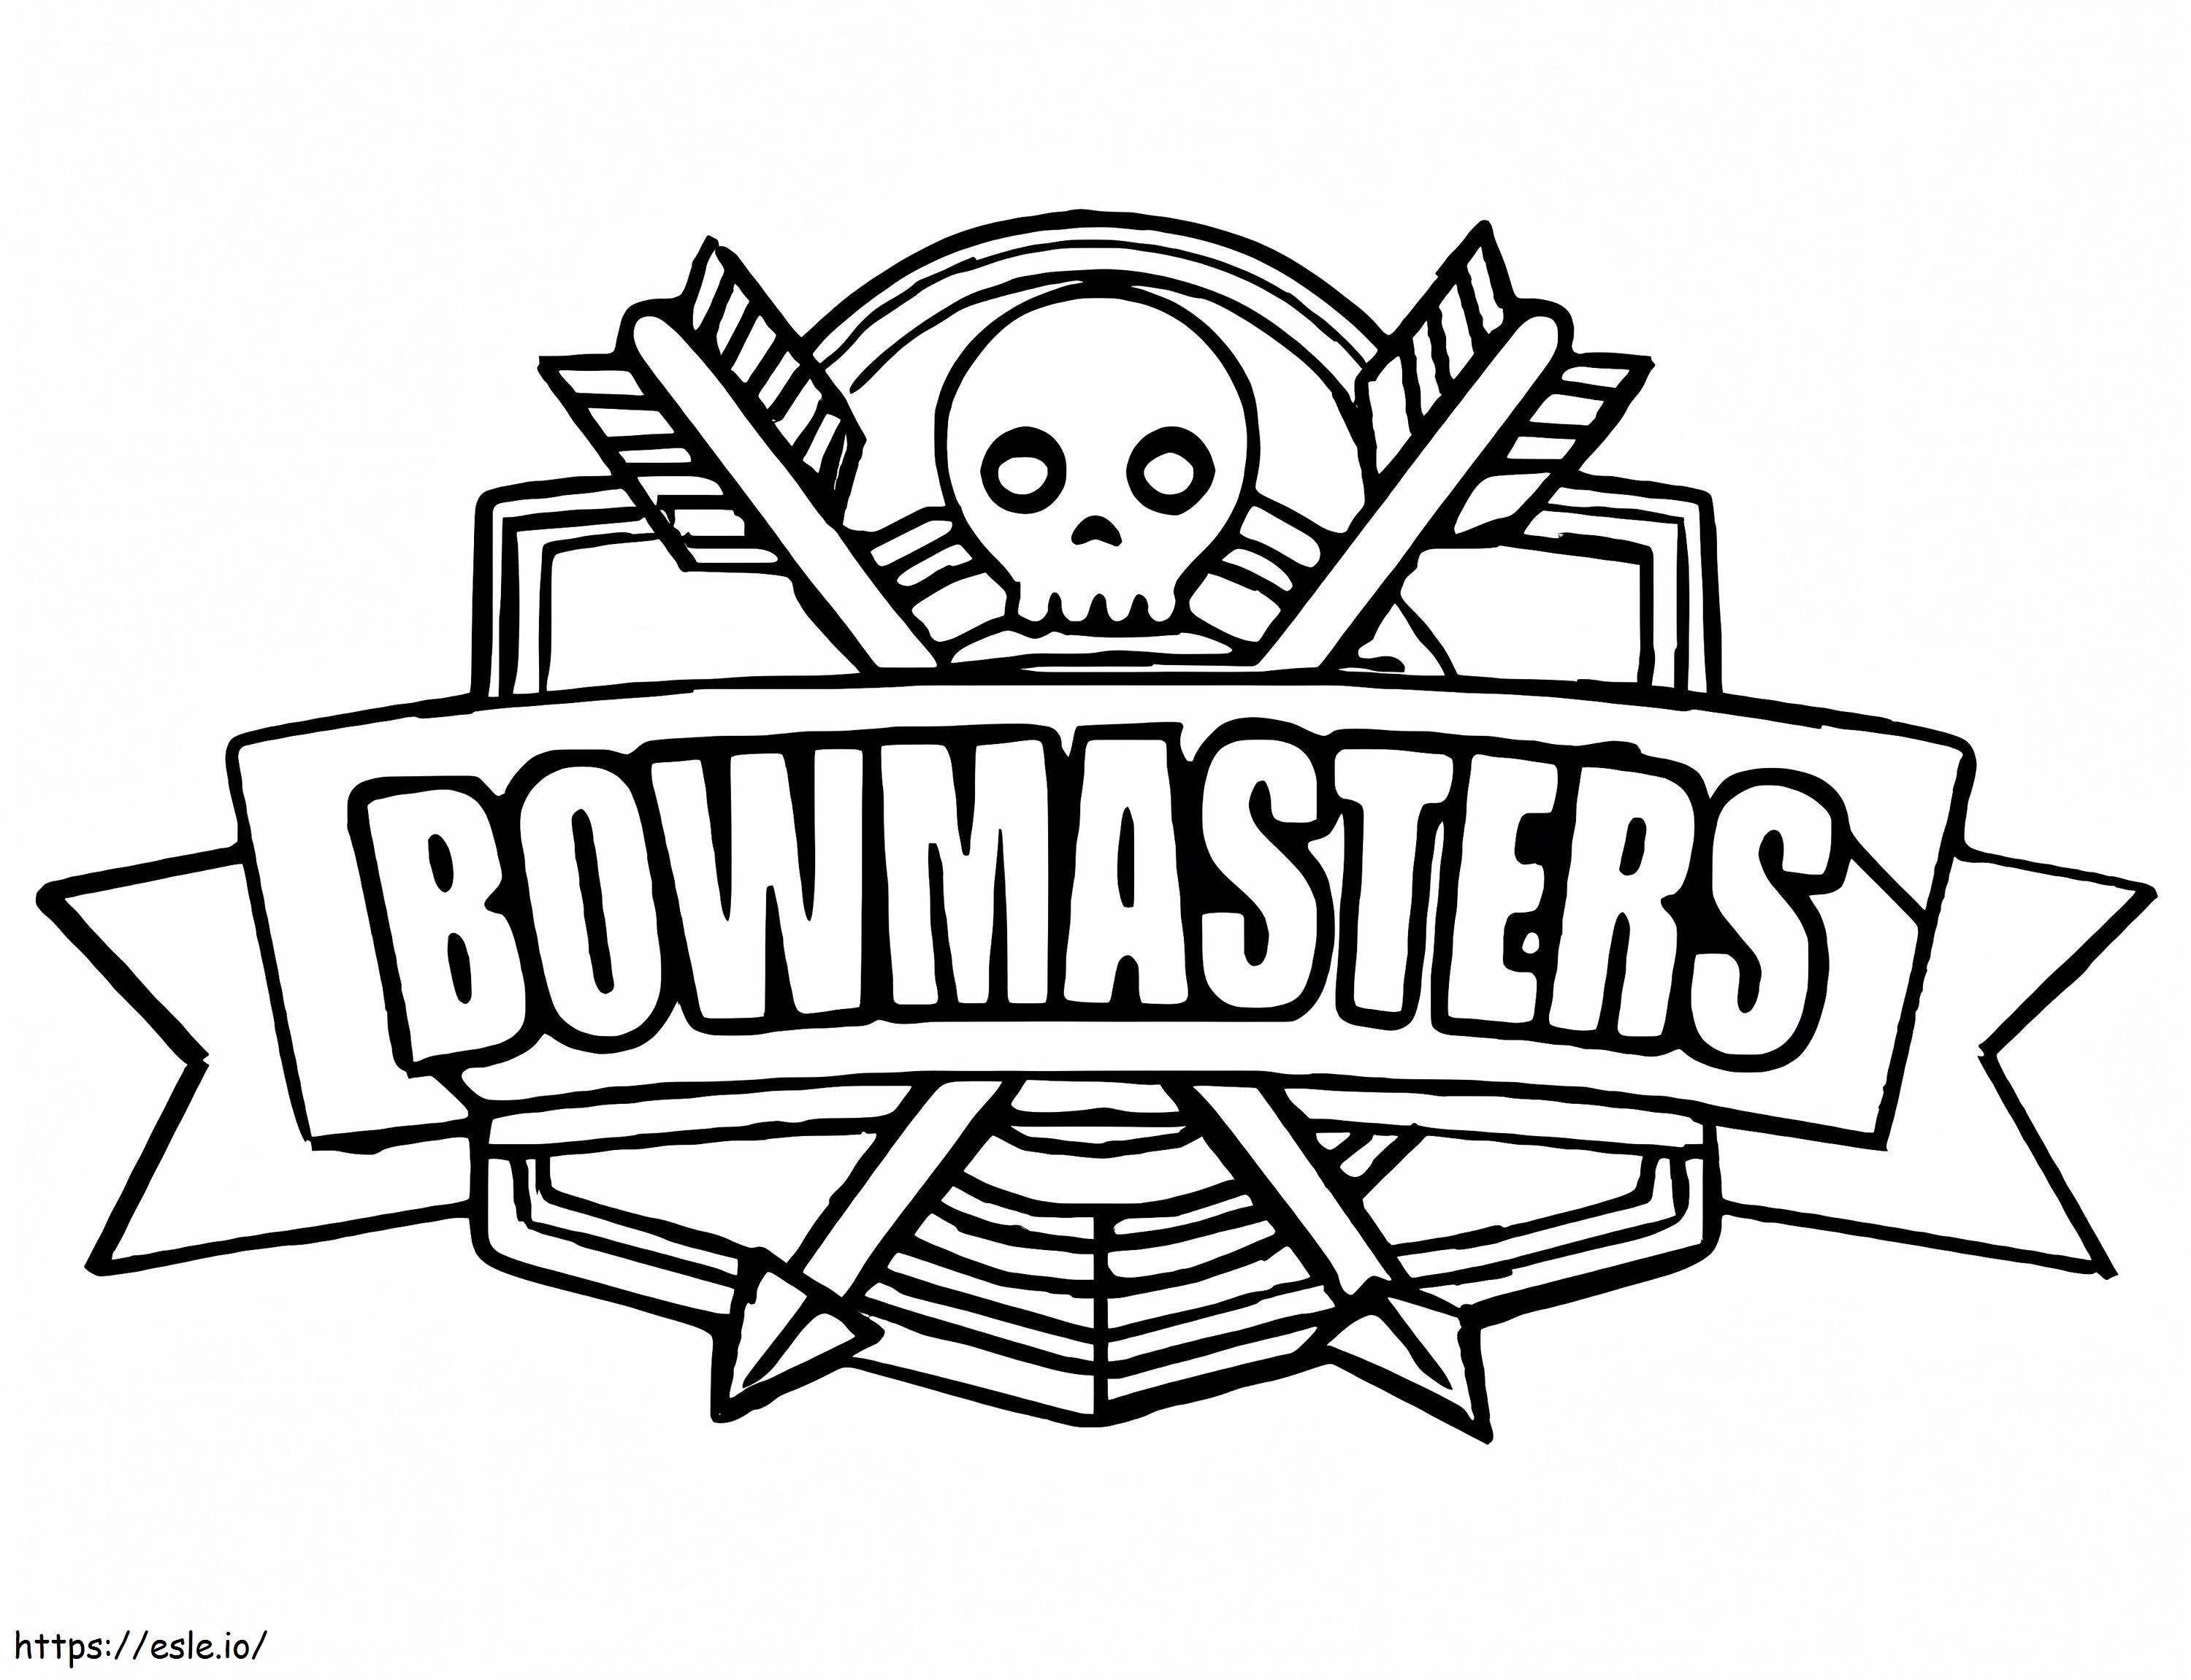 Logo Bowmasters ausmalbilder